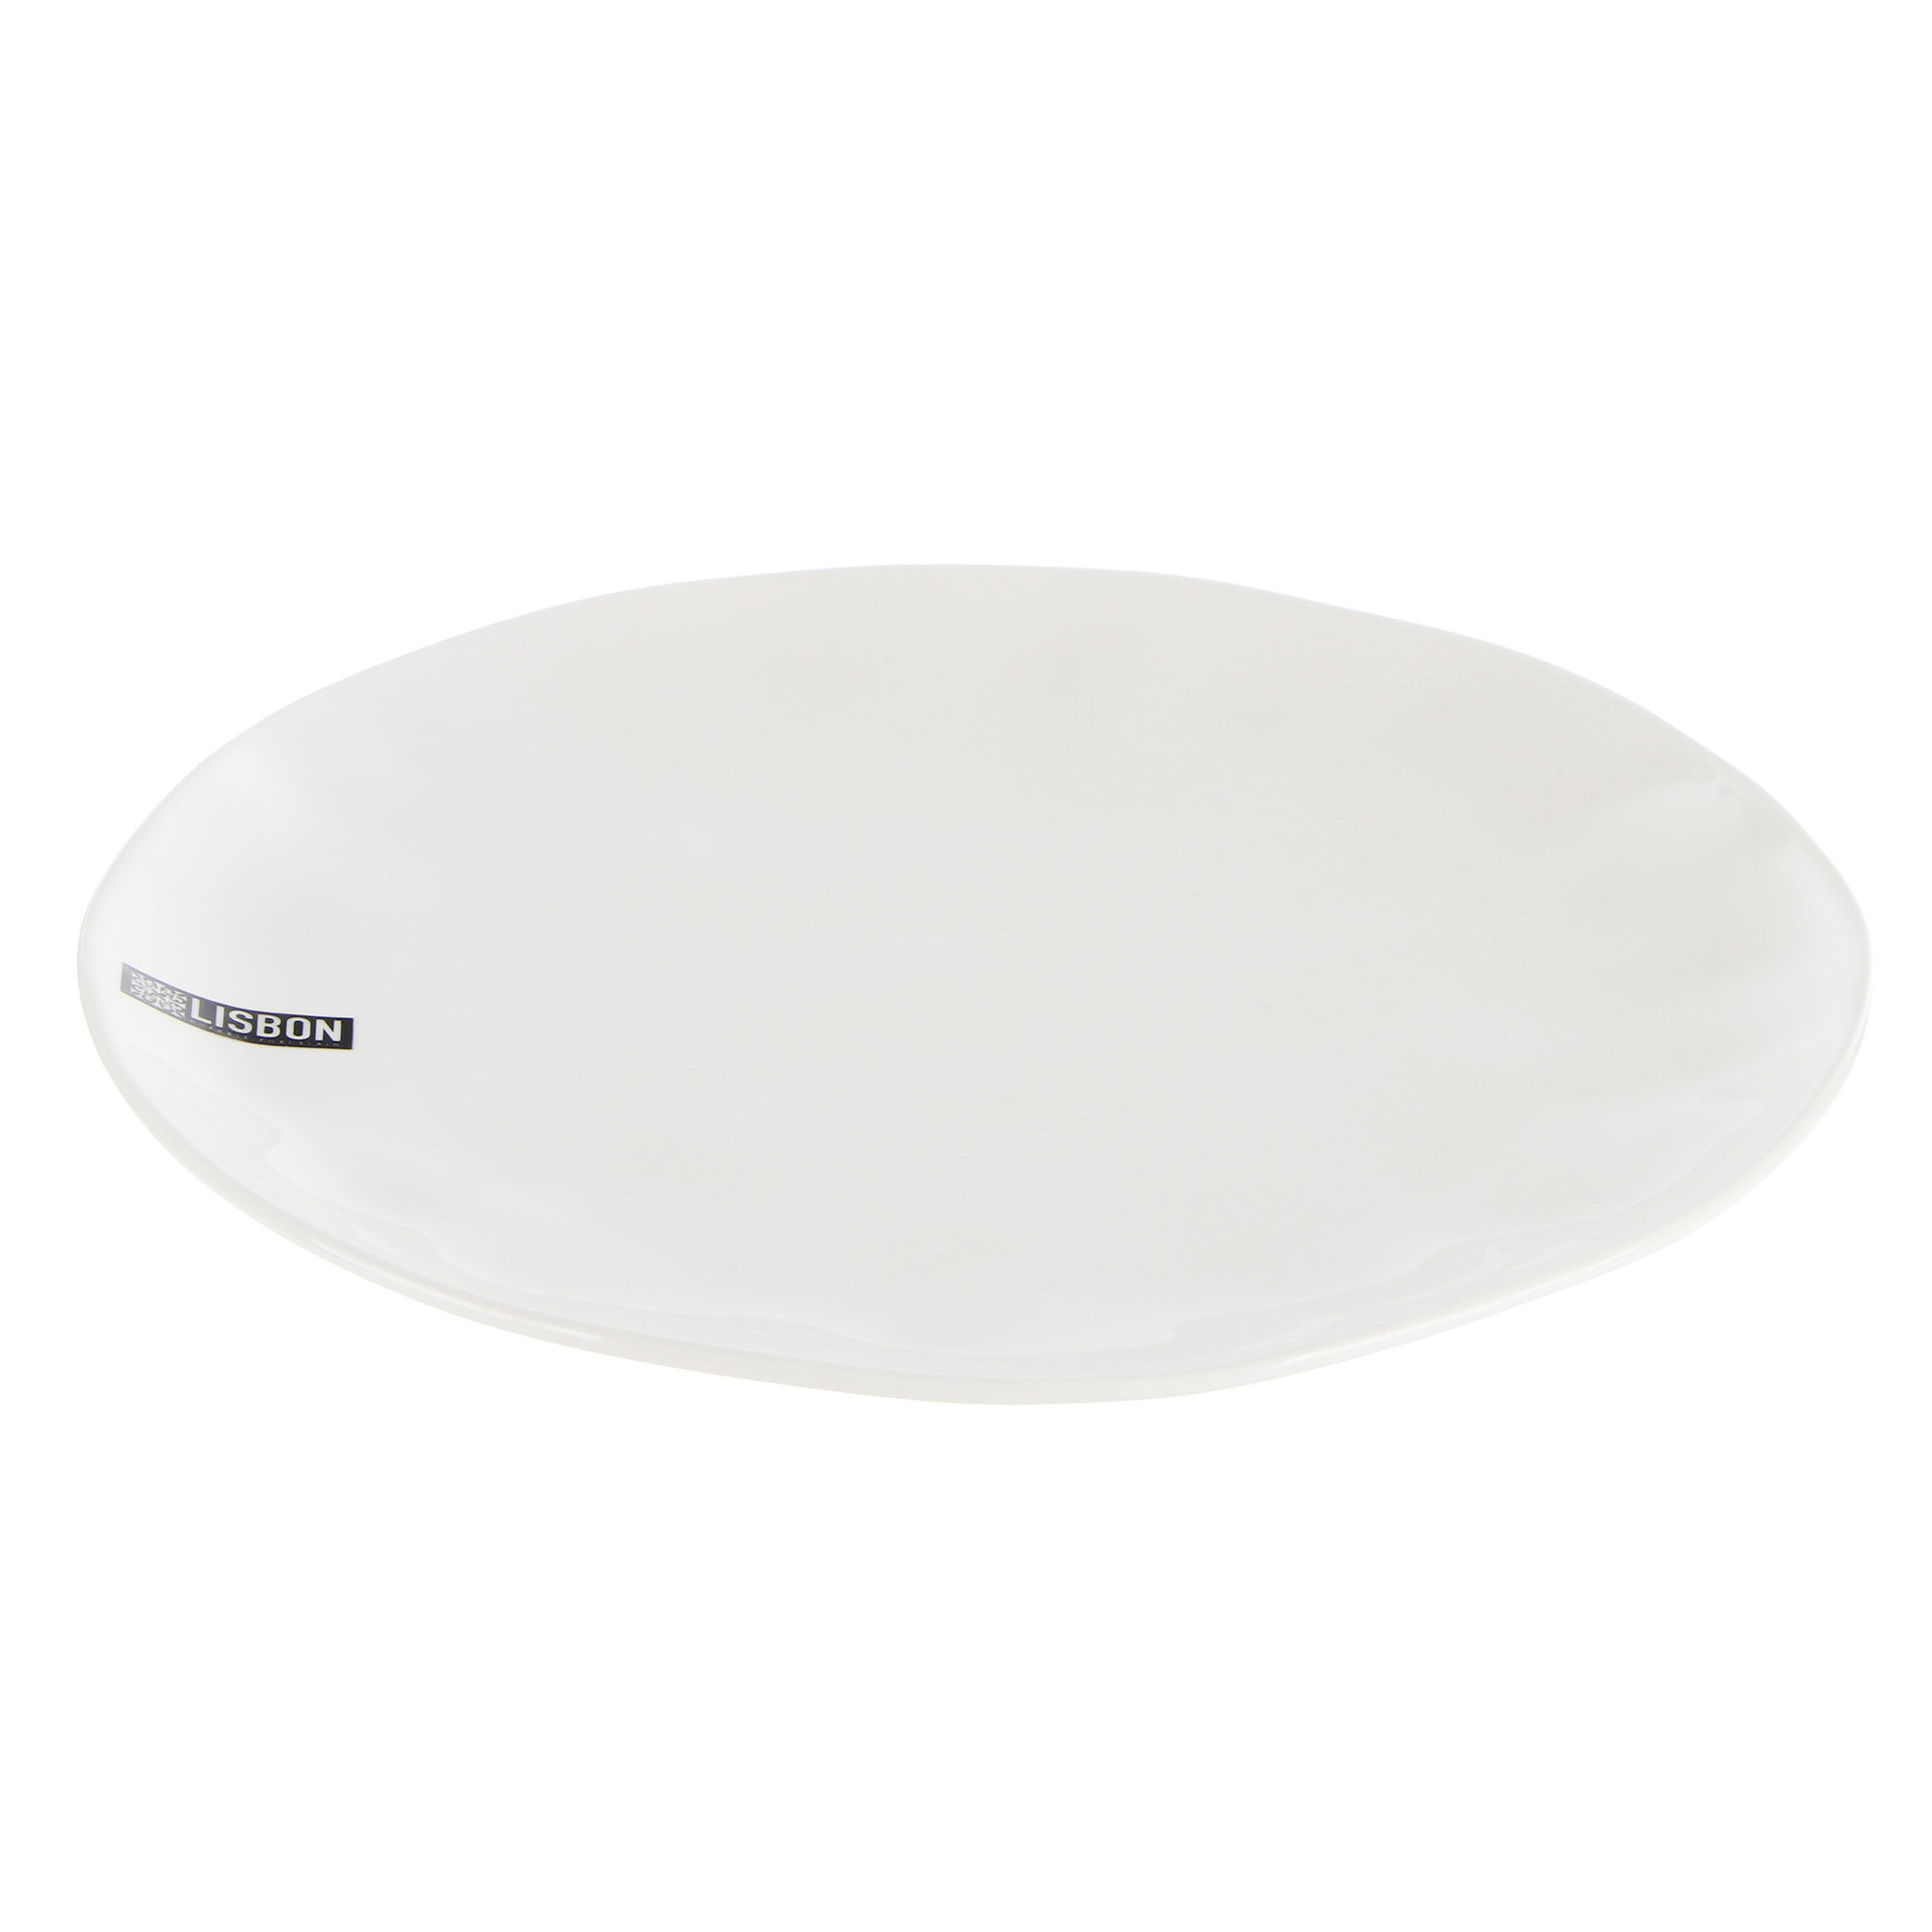 Тарелка для вторых блюд Koopman 26х25,5 см, цвет белый - фото 2